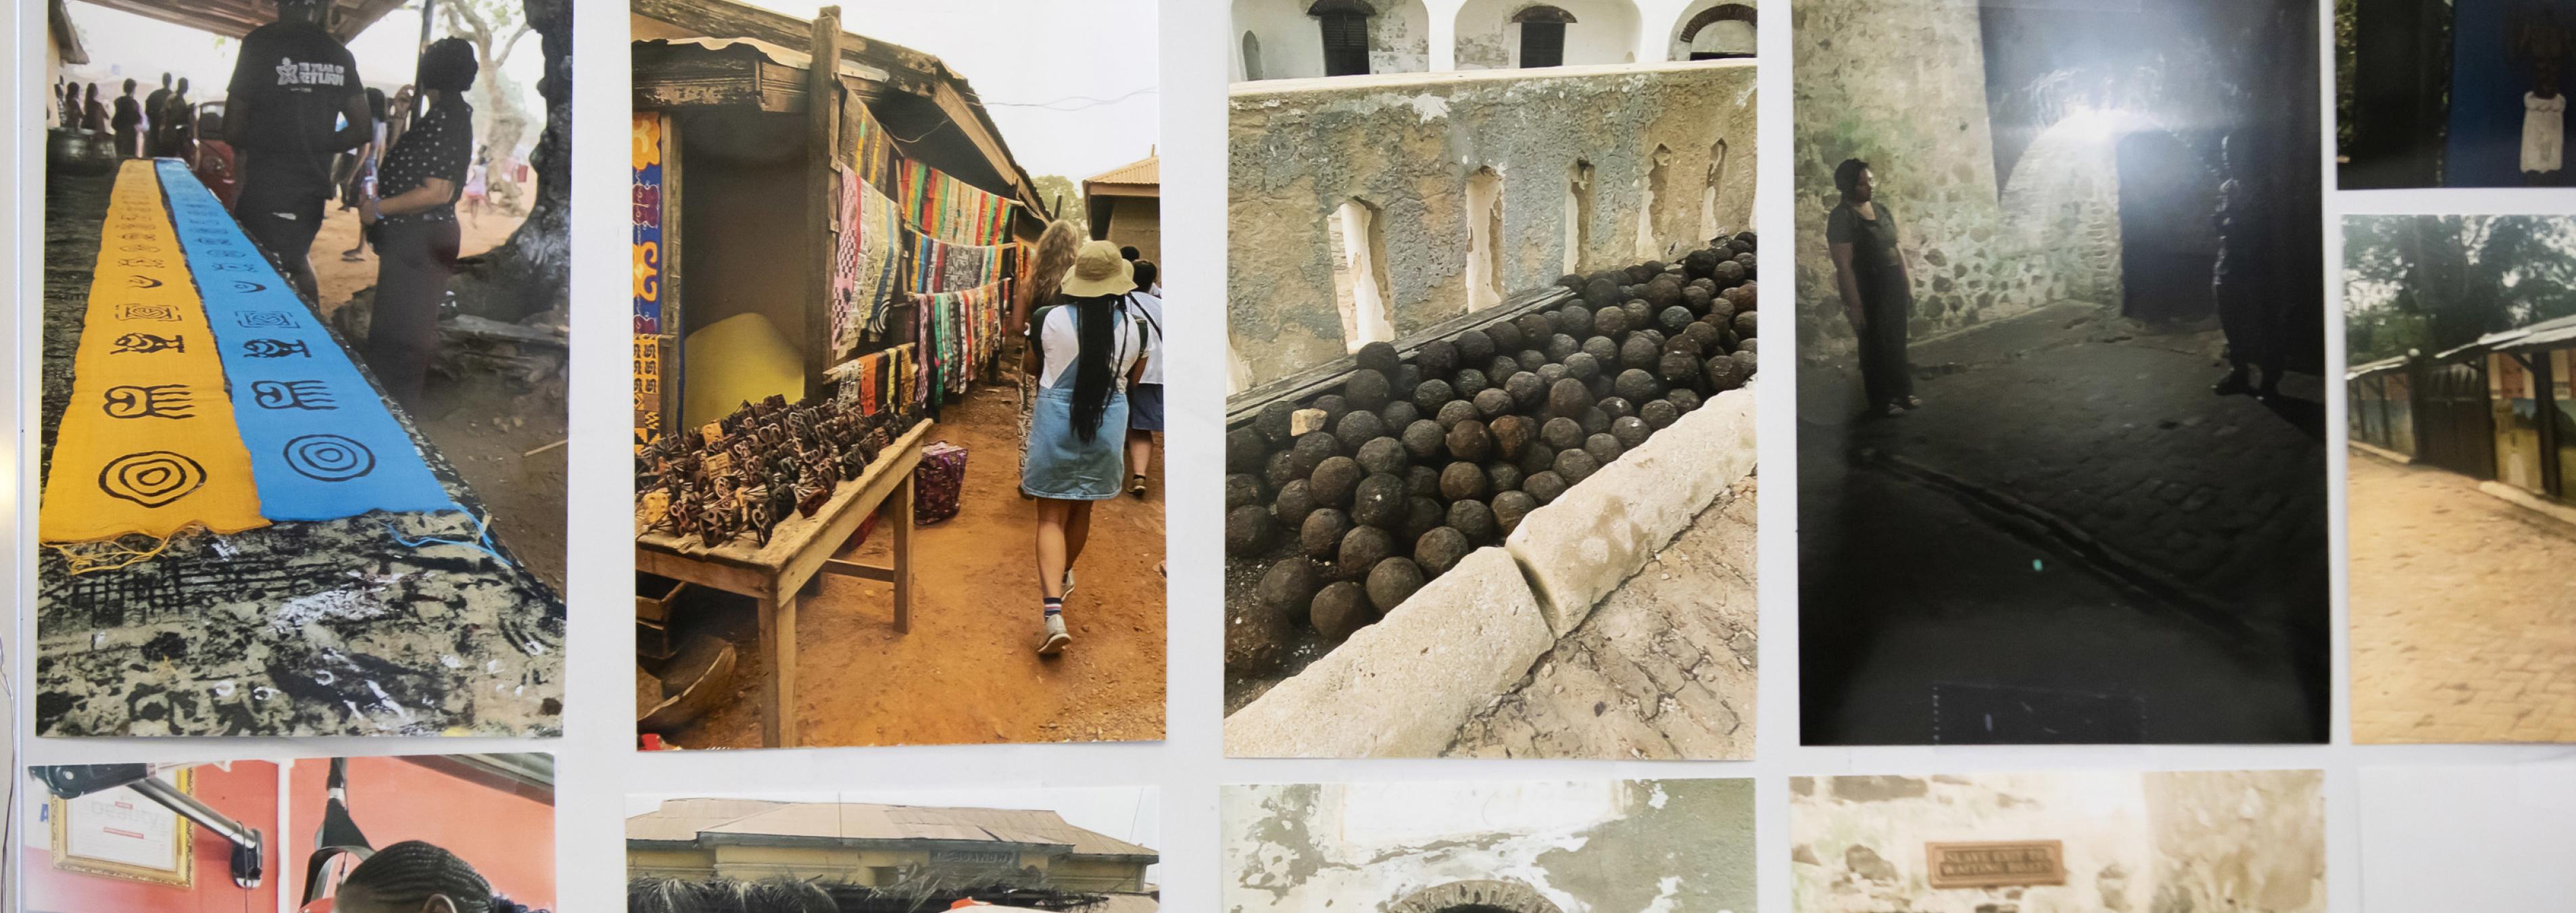 Photos from an AFAM trip to Ghana